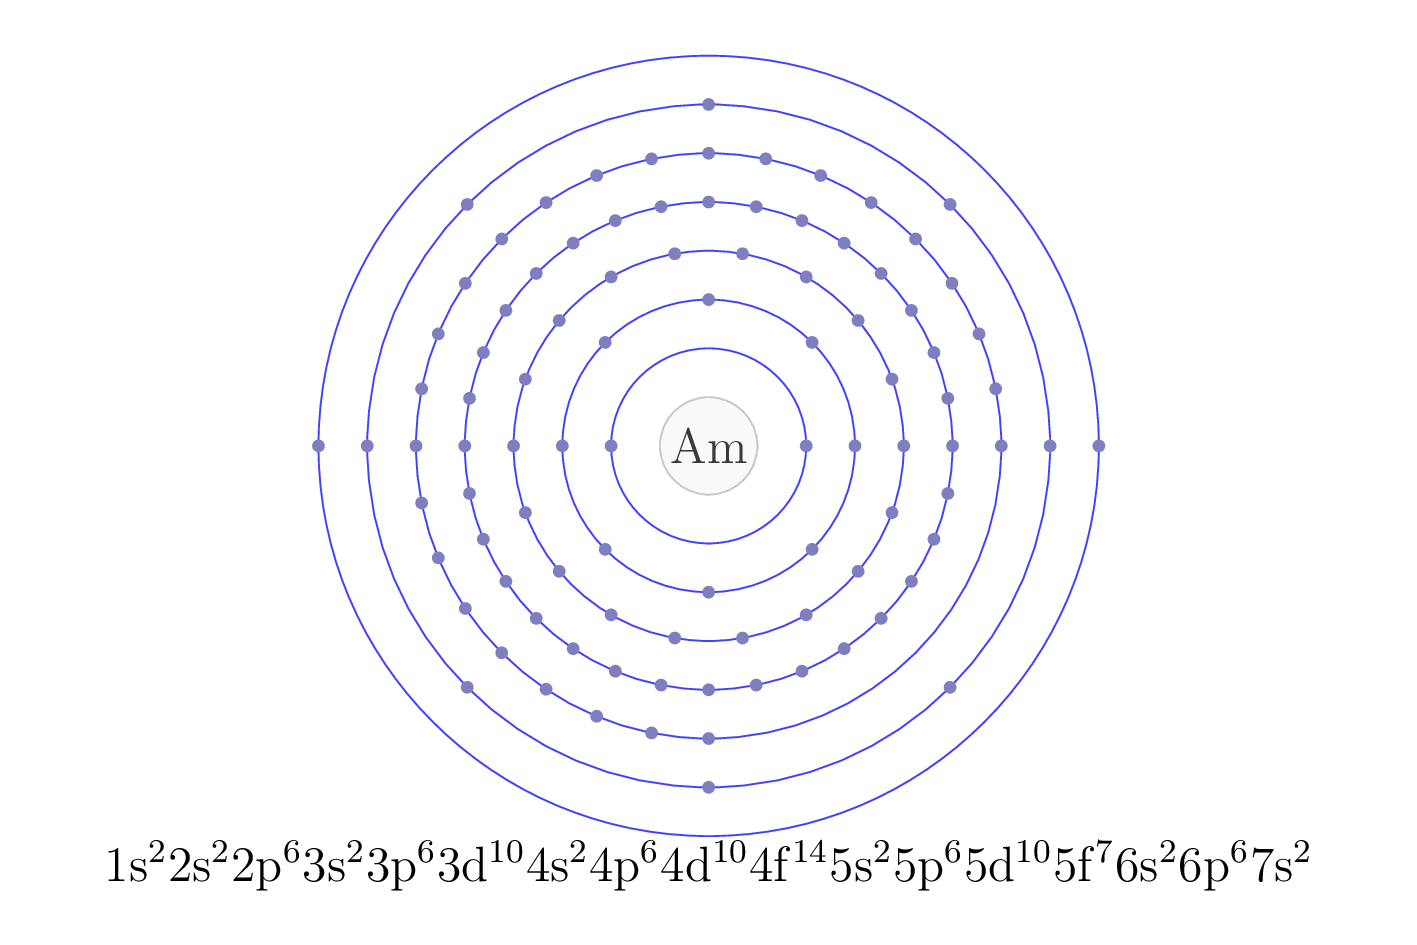 electron configuration of element Am